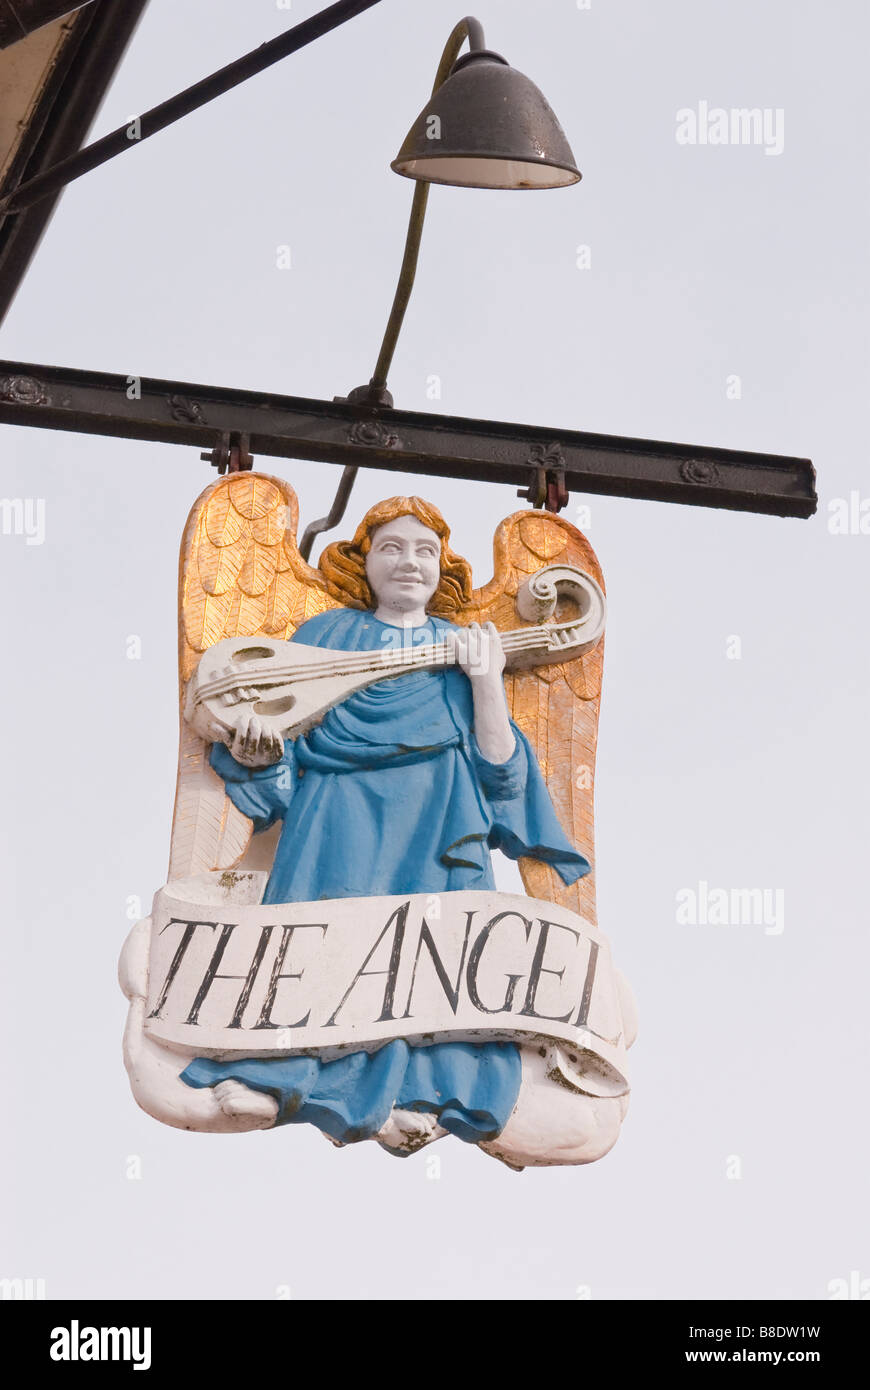 The Angel Hotel pub sign in Lavenham,Suffolk,Uk Stock Photo